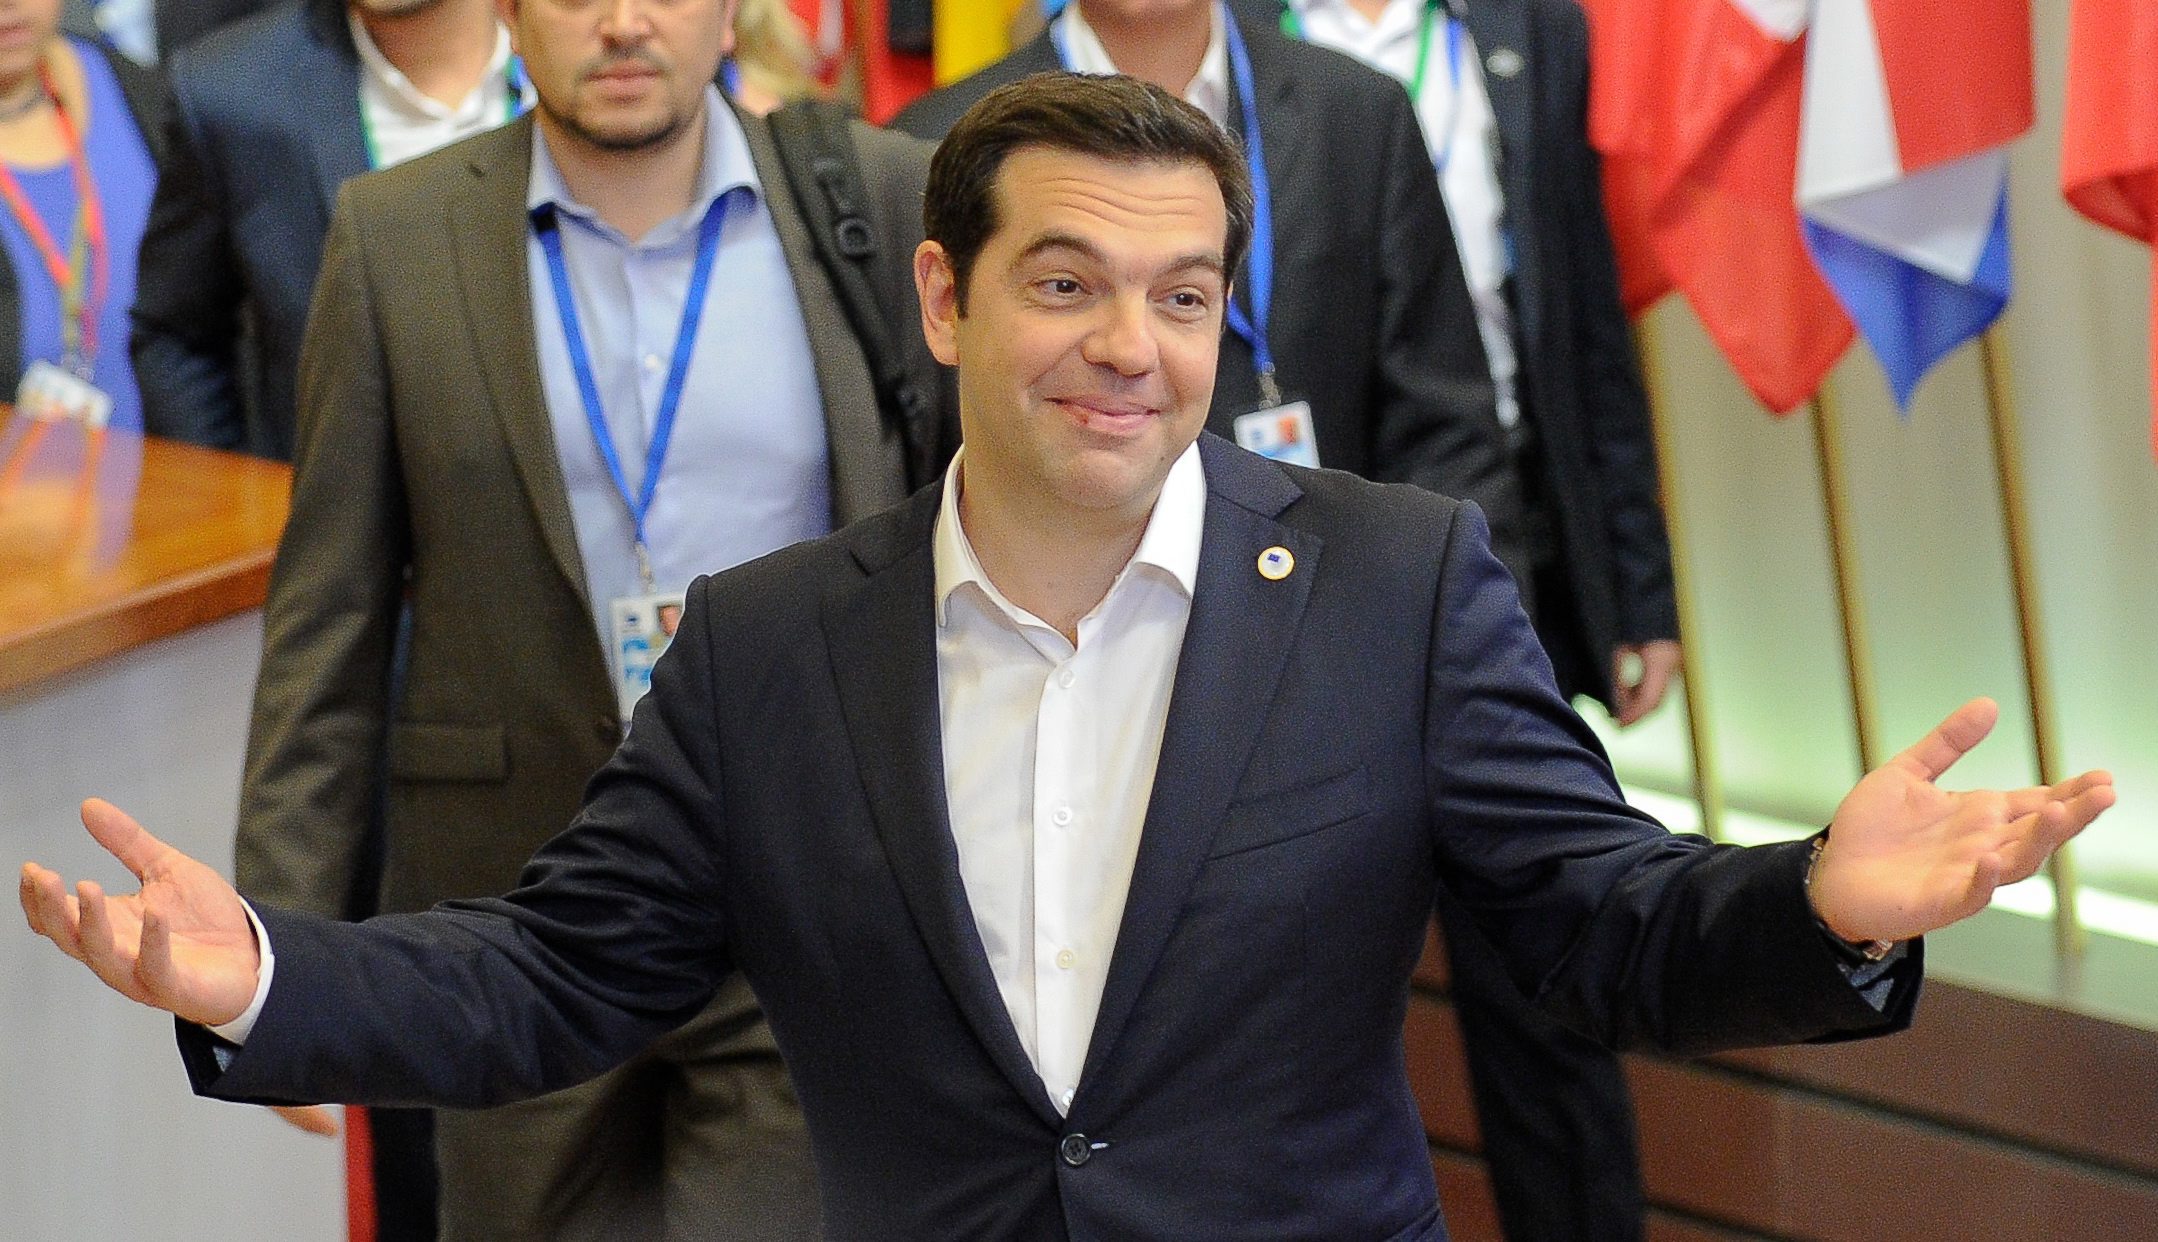 Economist: Η Ελλάδα κατέληξε σε χειρότερη συμφωνία από αυτή που απέρριψε -Σύντομα θα βγουν μαχαίρια